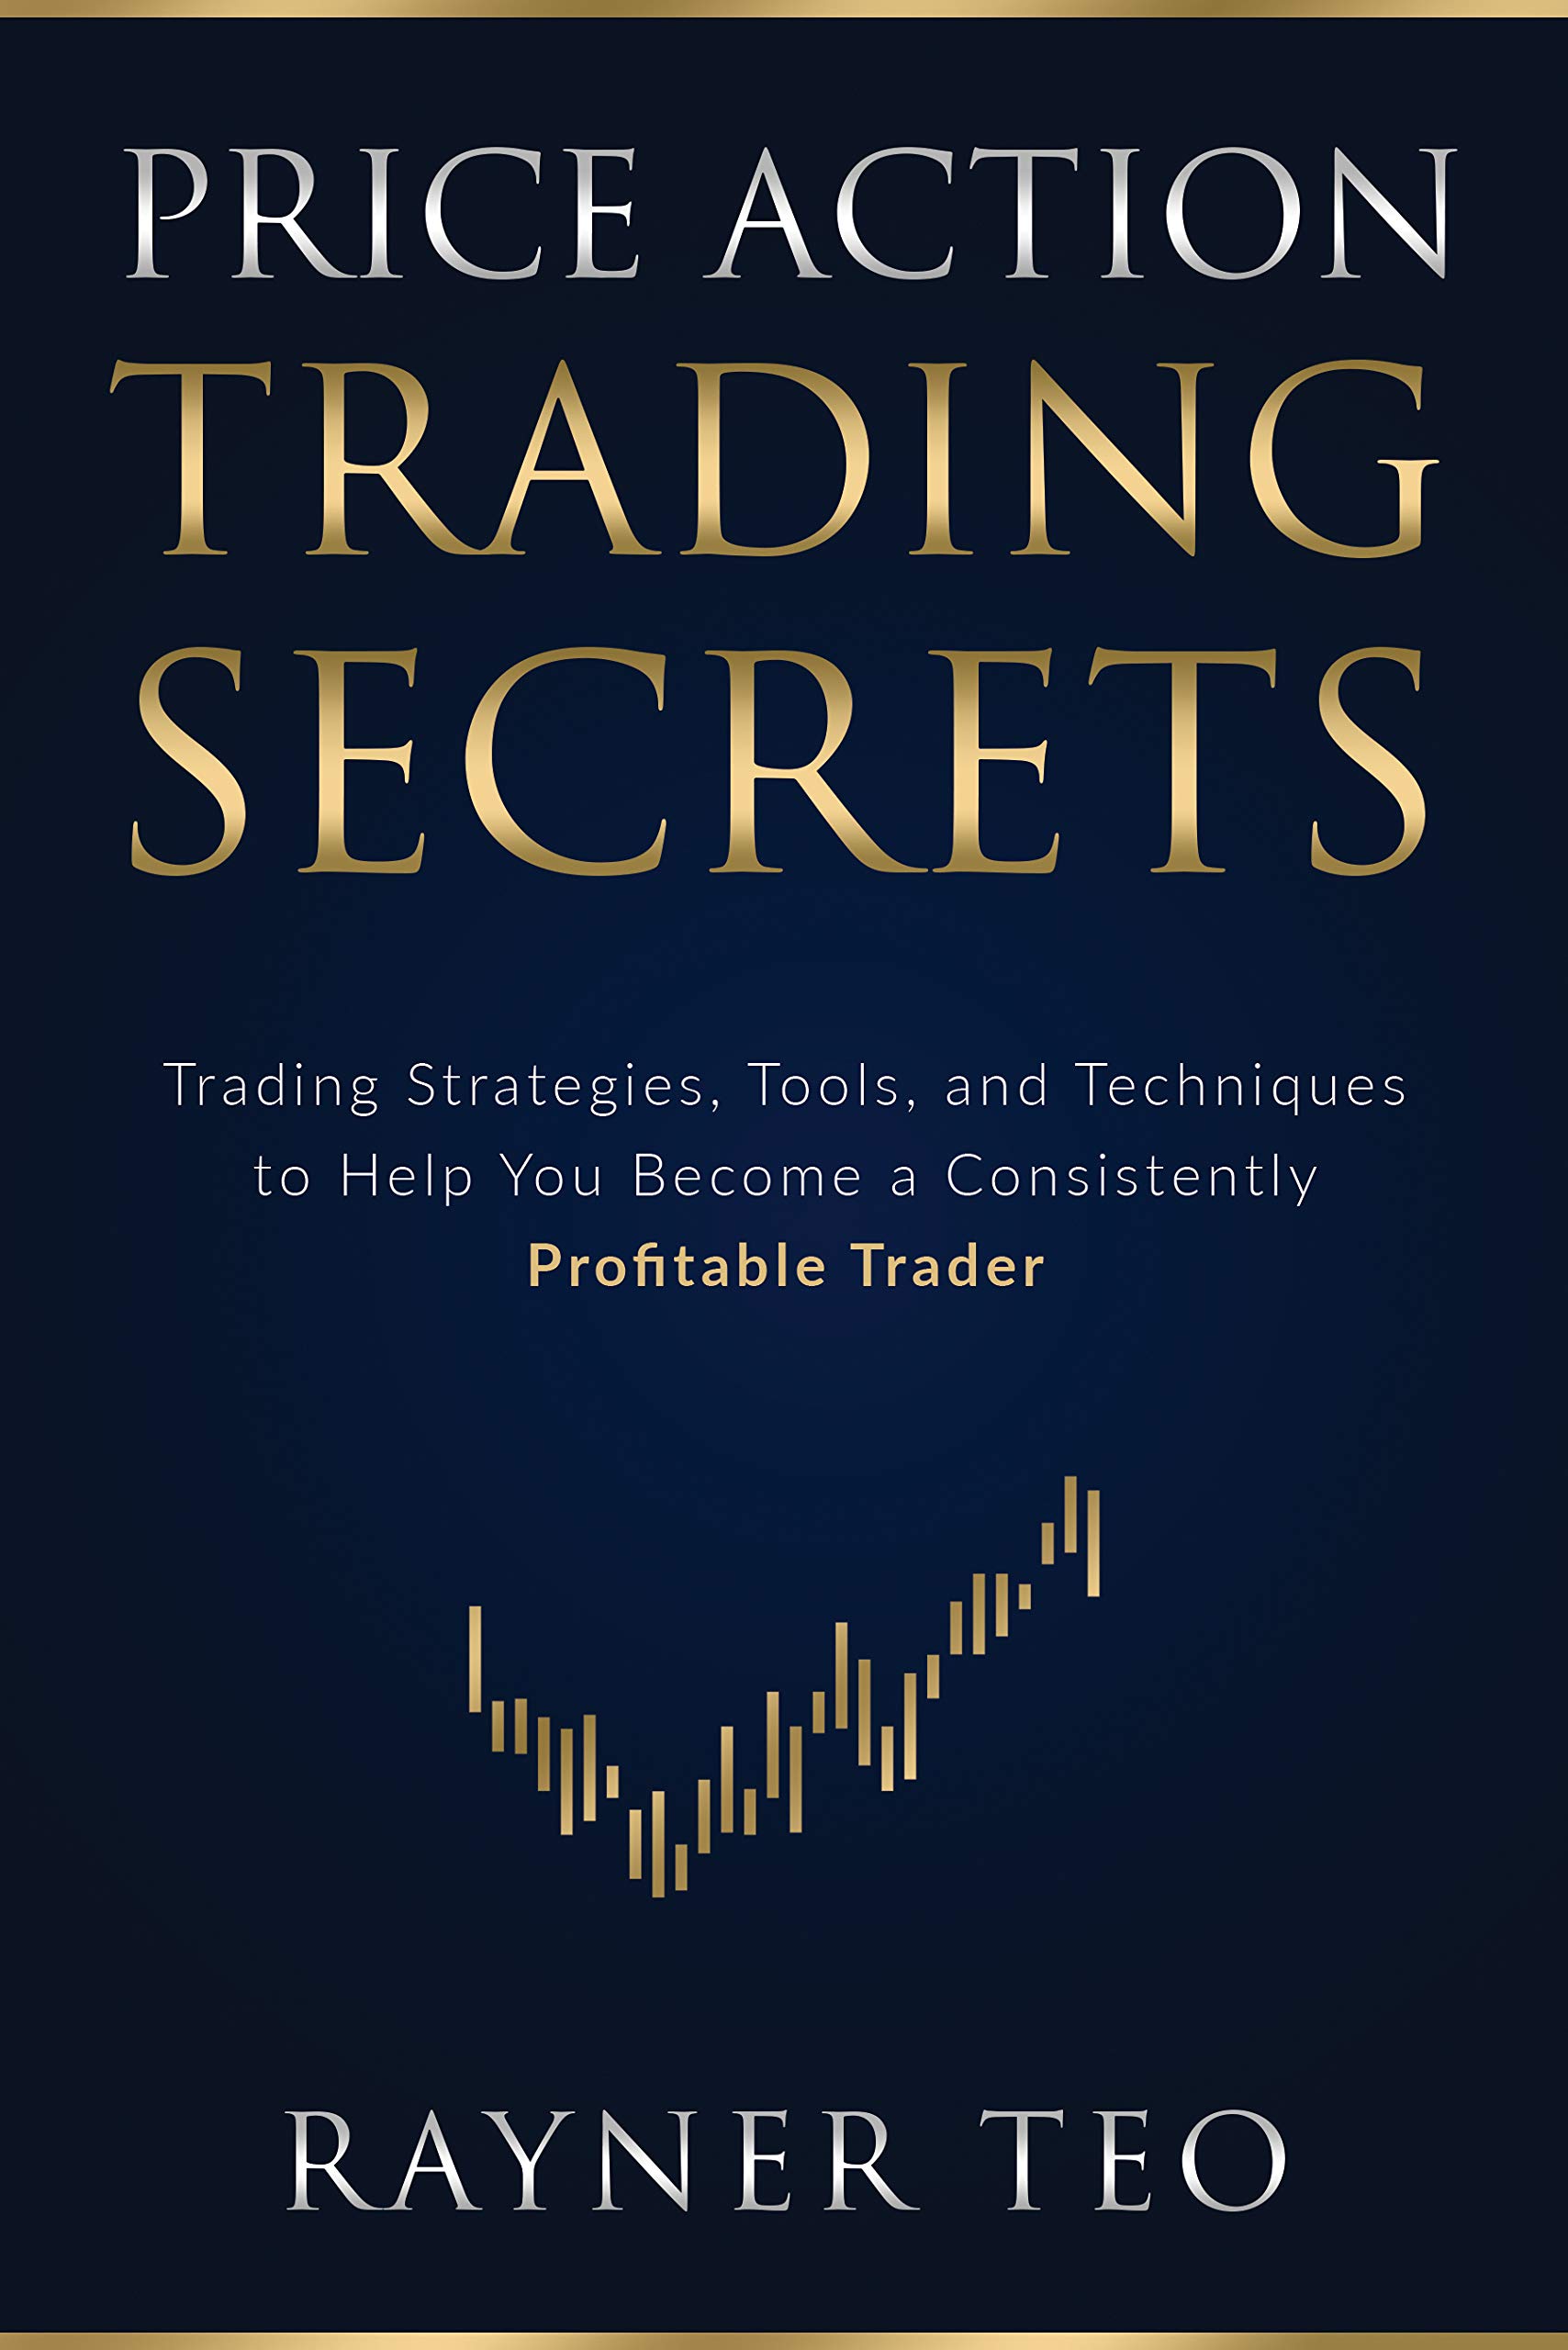 price action trading secrets free pdf